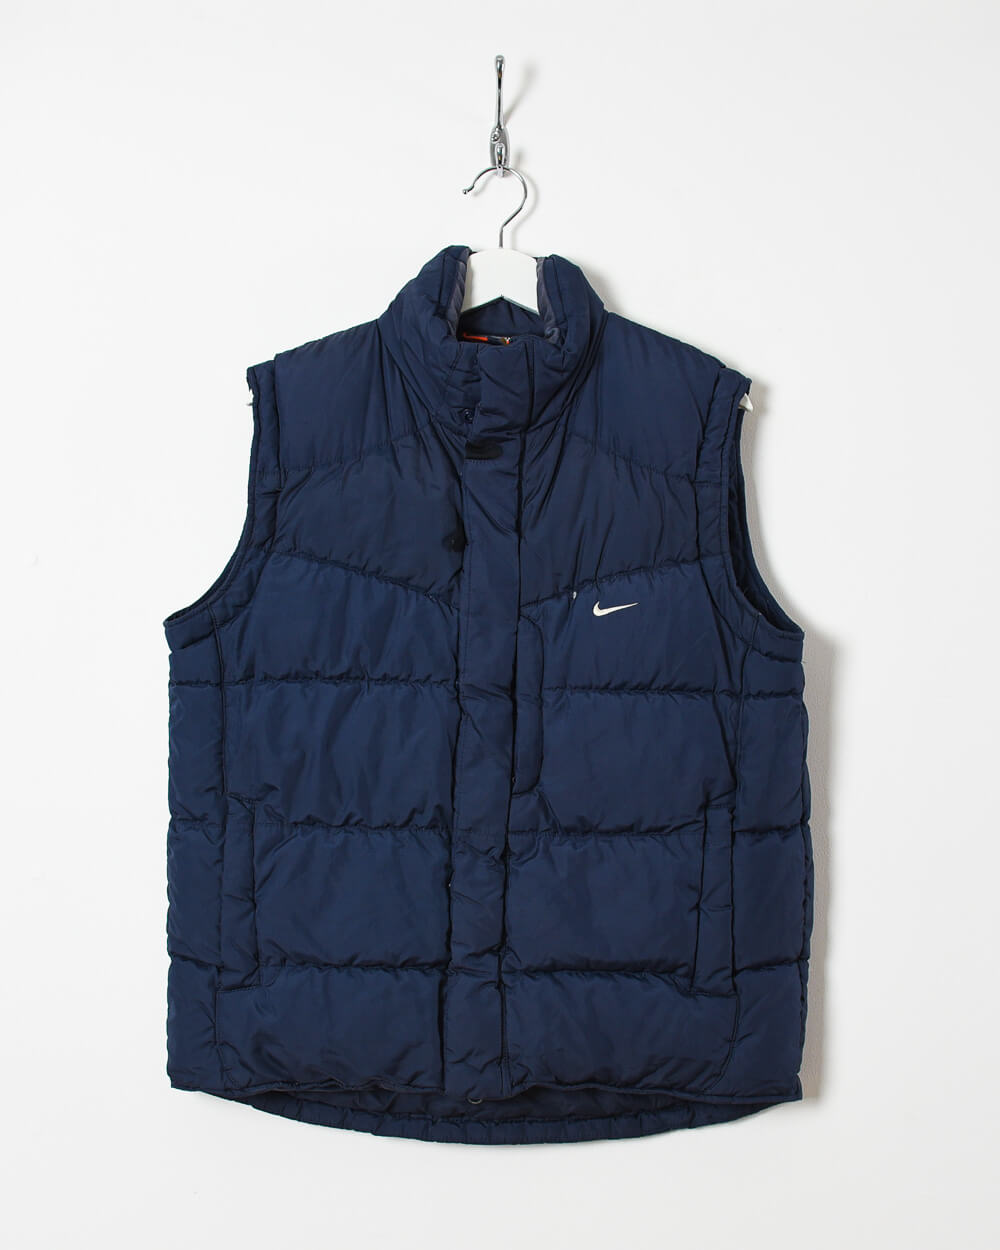 Nike Down Gilet -  Medium - Domno Vintage 90s, 80s, 00s Retro and Vintage Clothing 